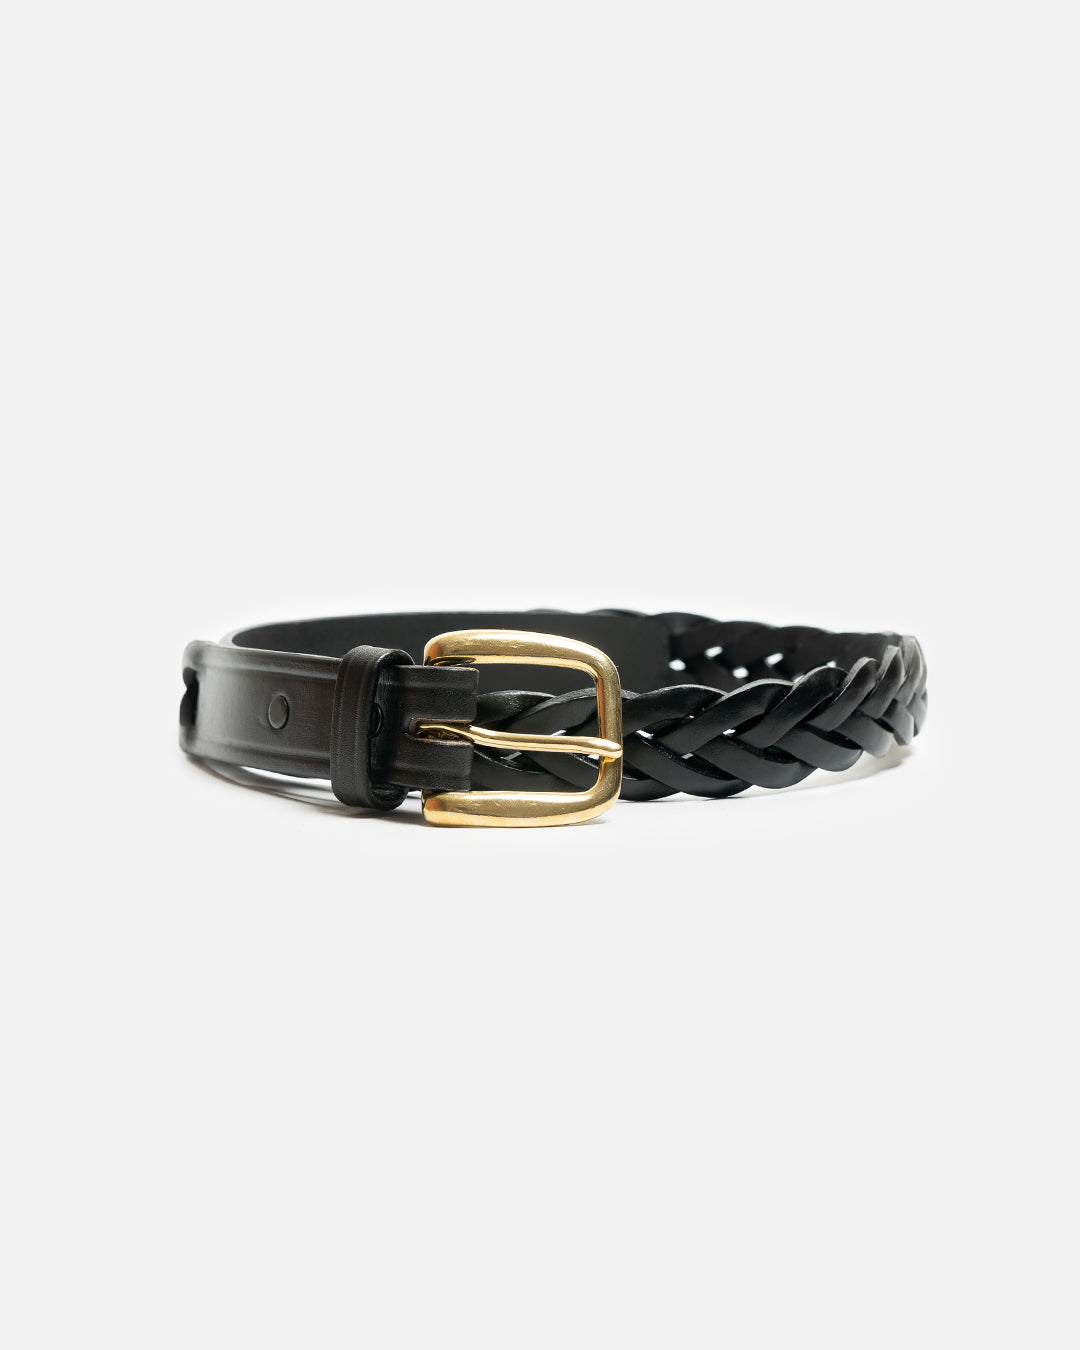 Tory Leather 1-1/4" Braided Belt 2161 Black